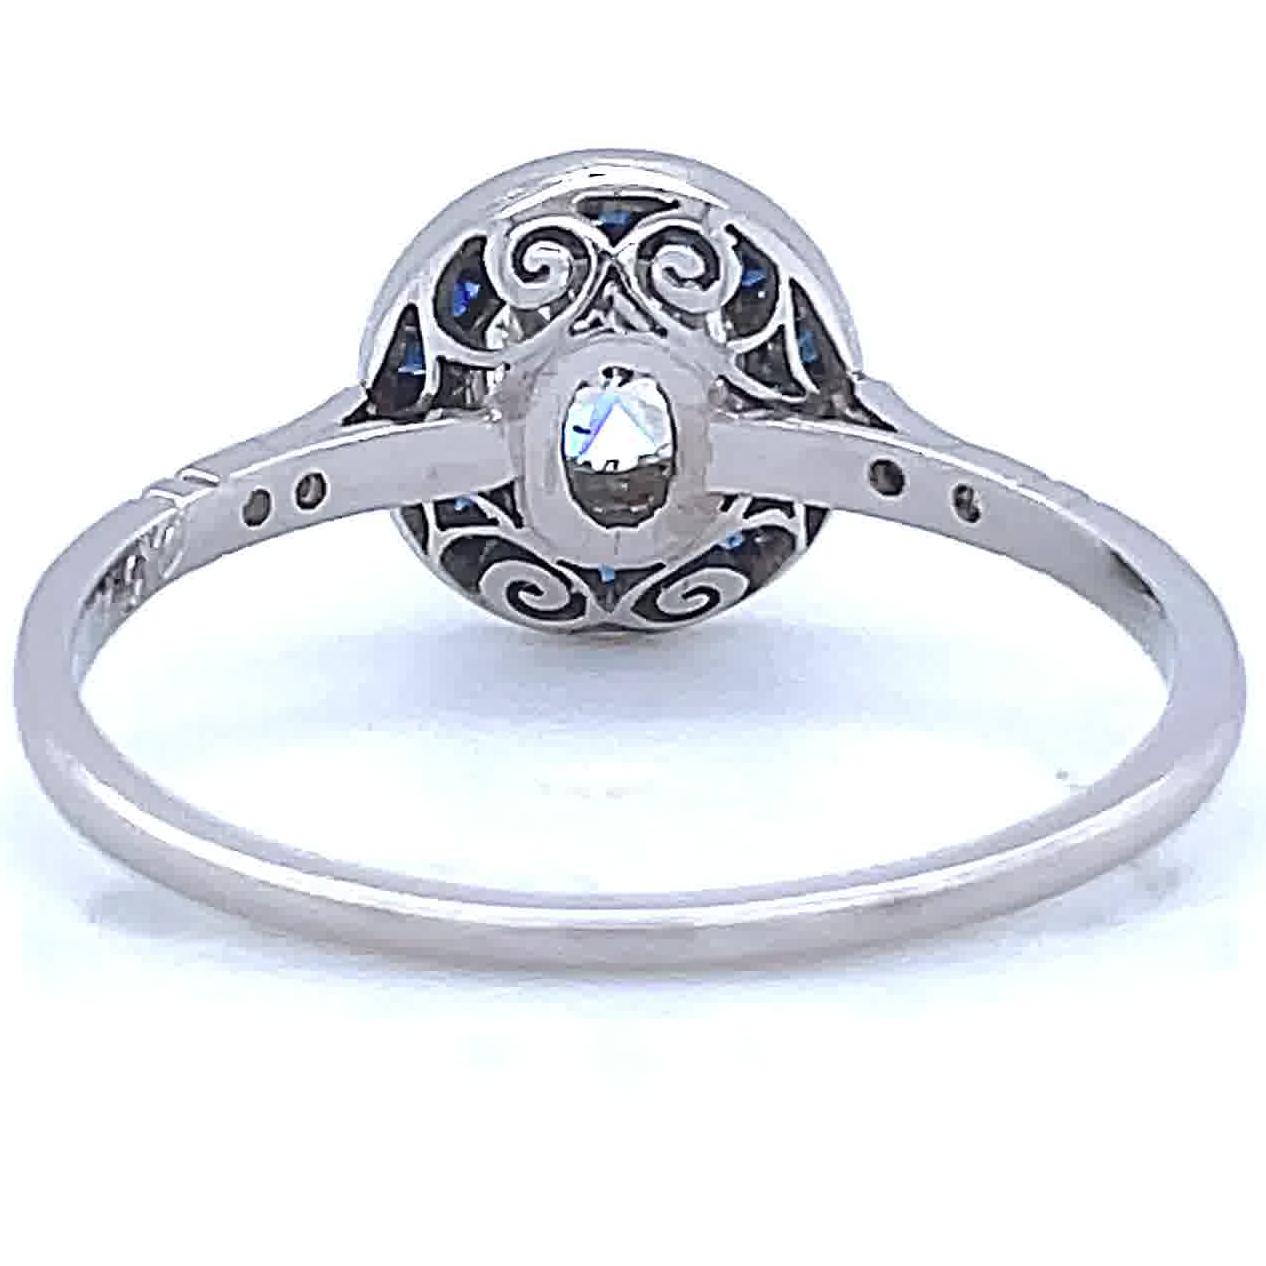 Women's Art Deco Inspired Engagement Ring Diamond Sapphire Target Ring